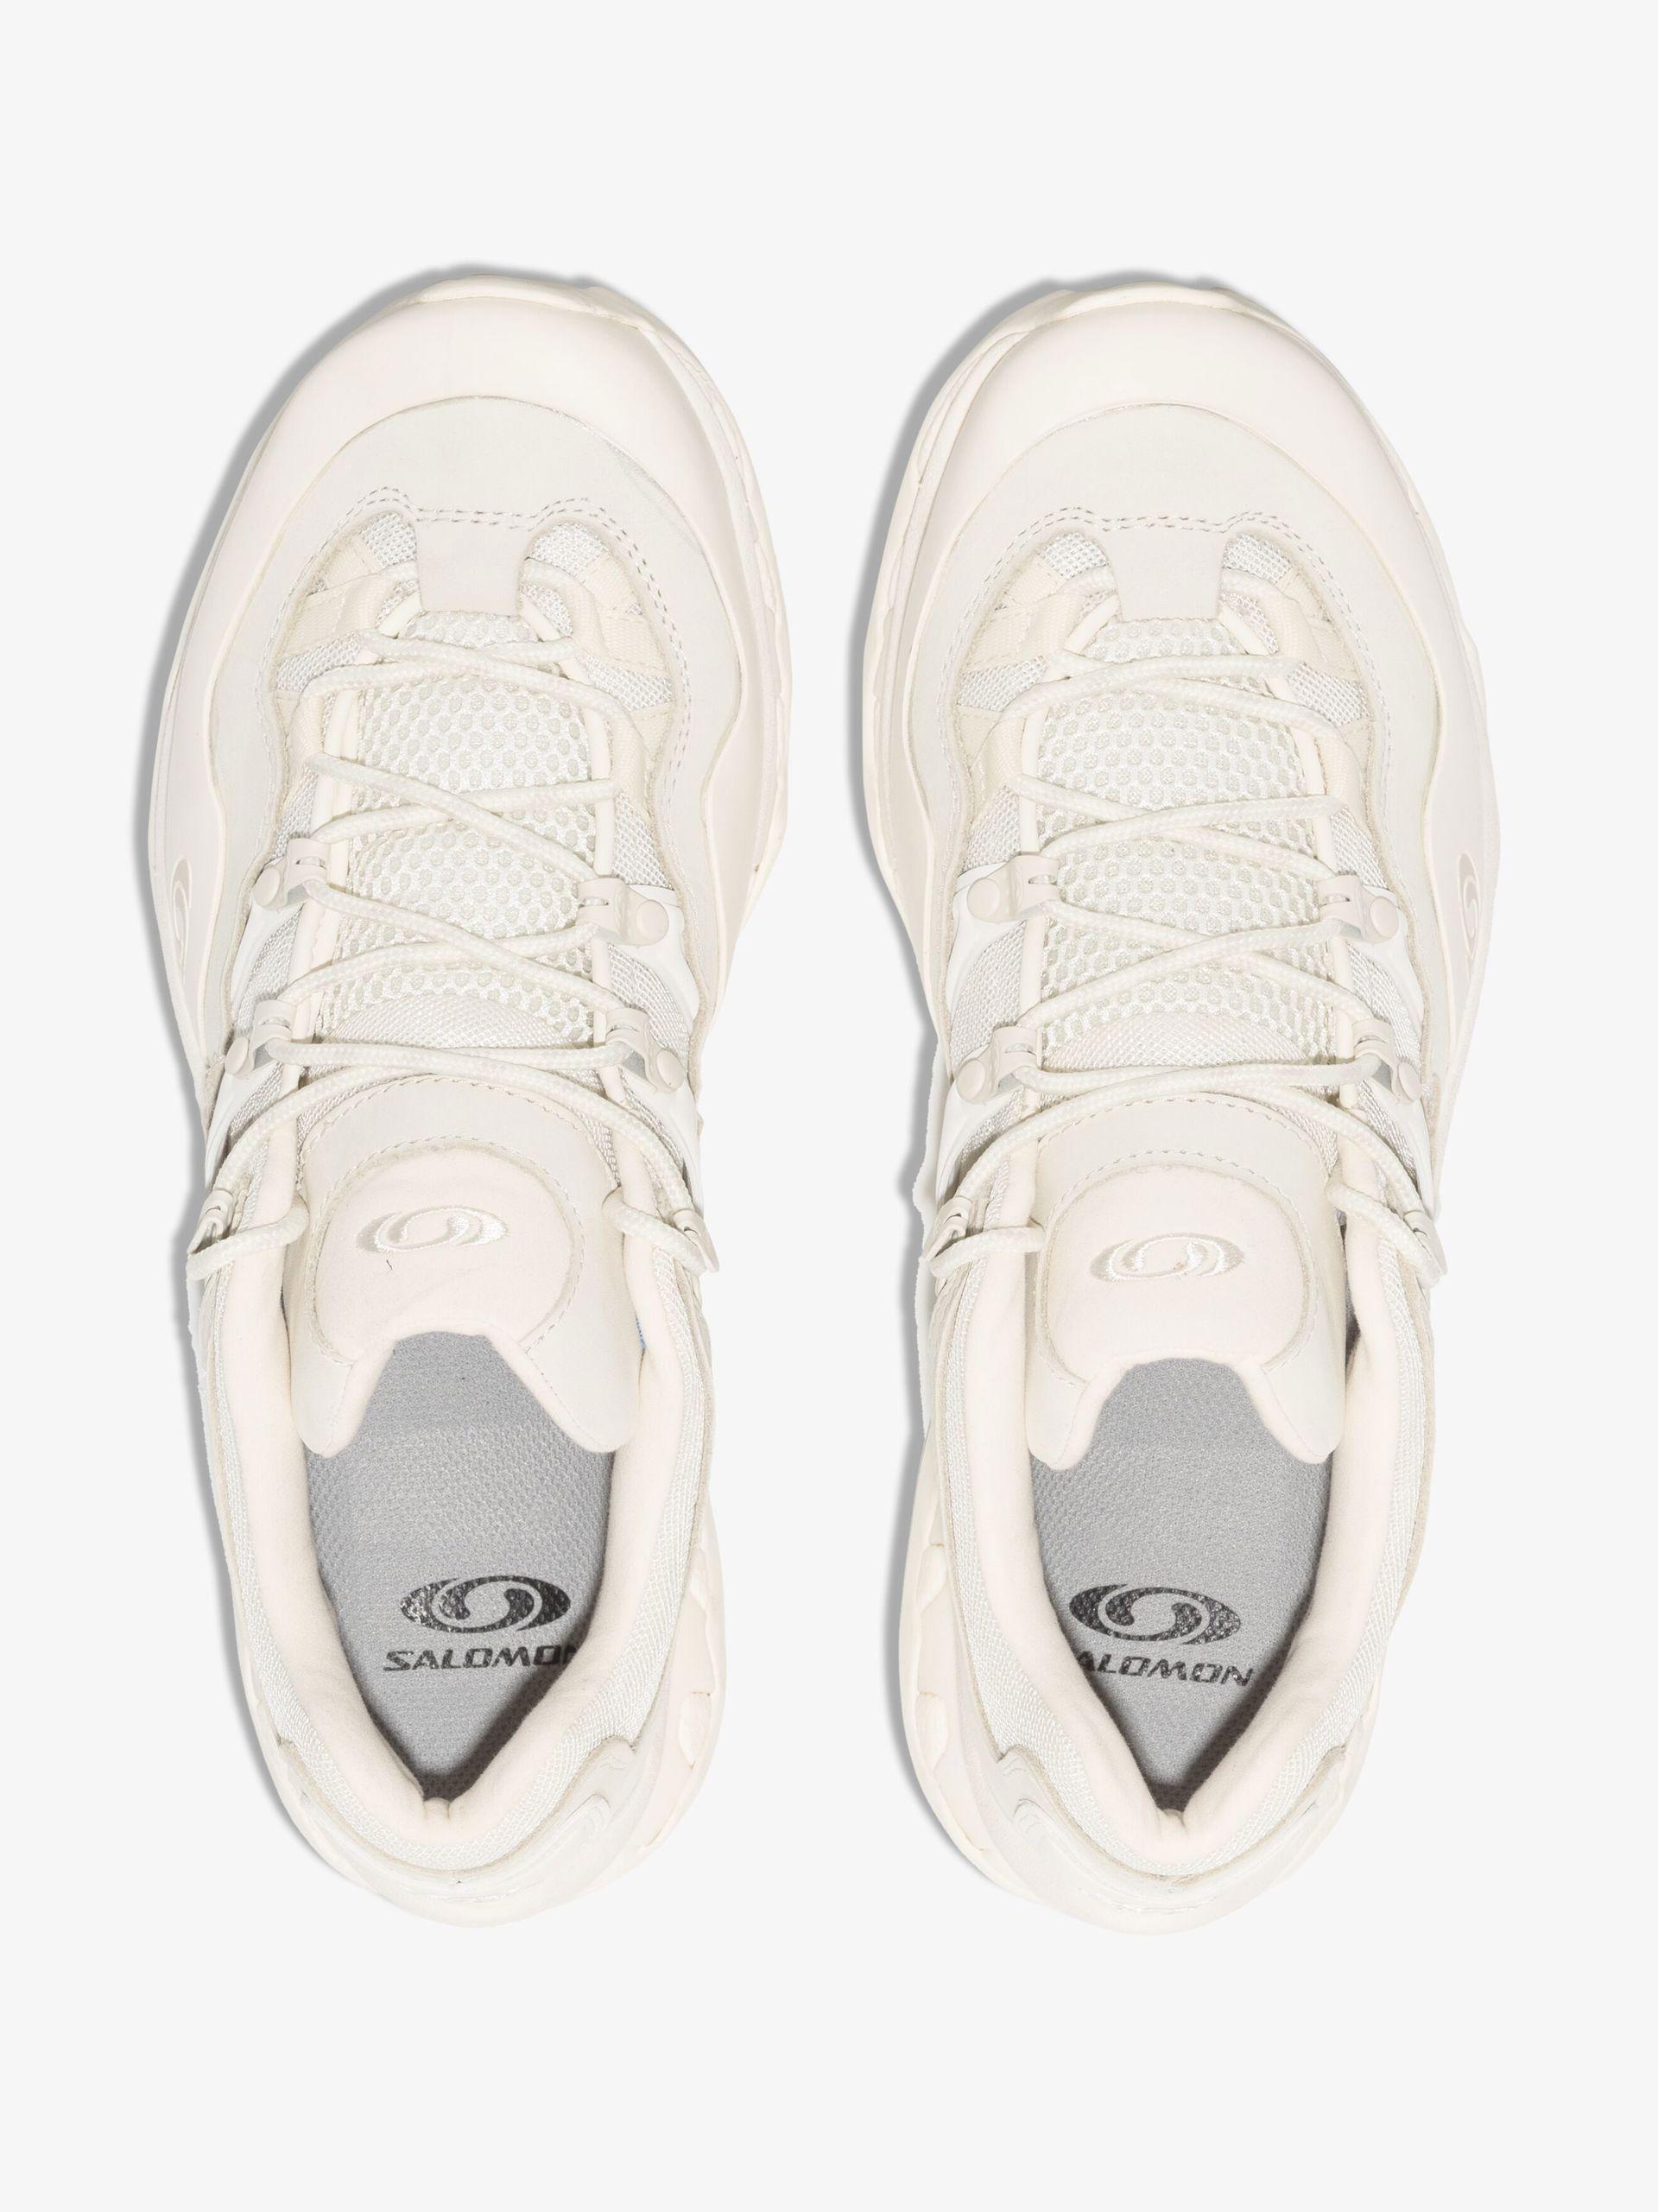 Salomon Lab White Xt-quest 2 Advanced Low Top Sneakers | Lyst